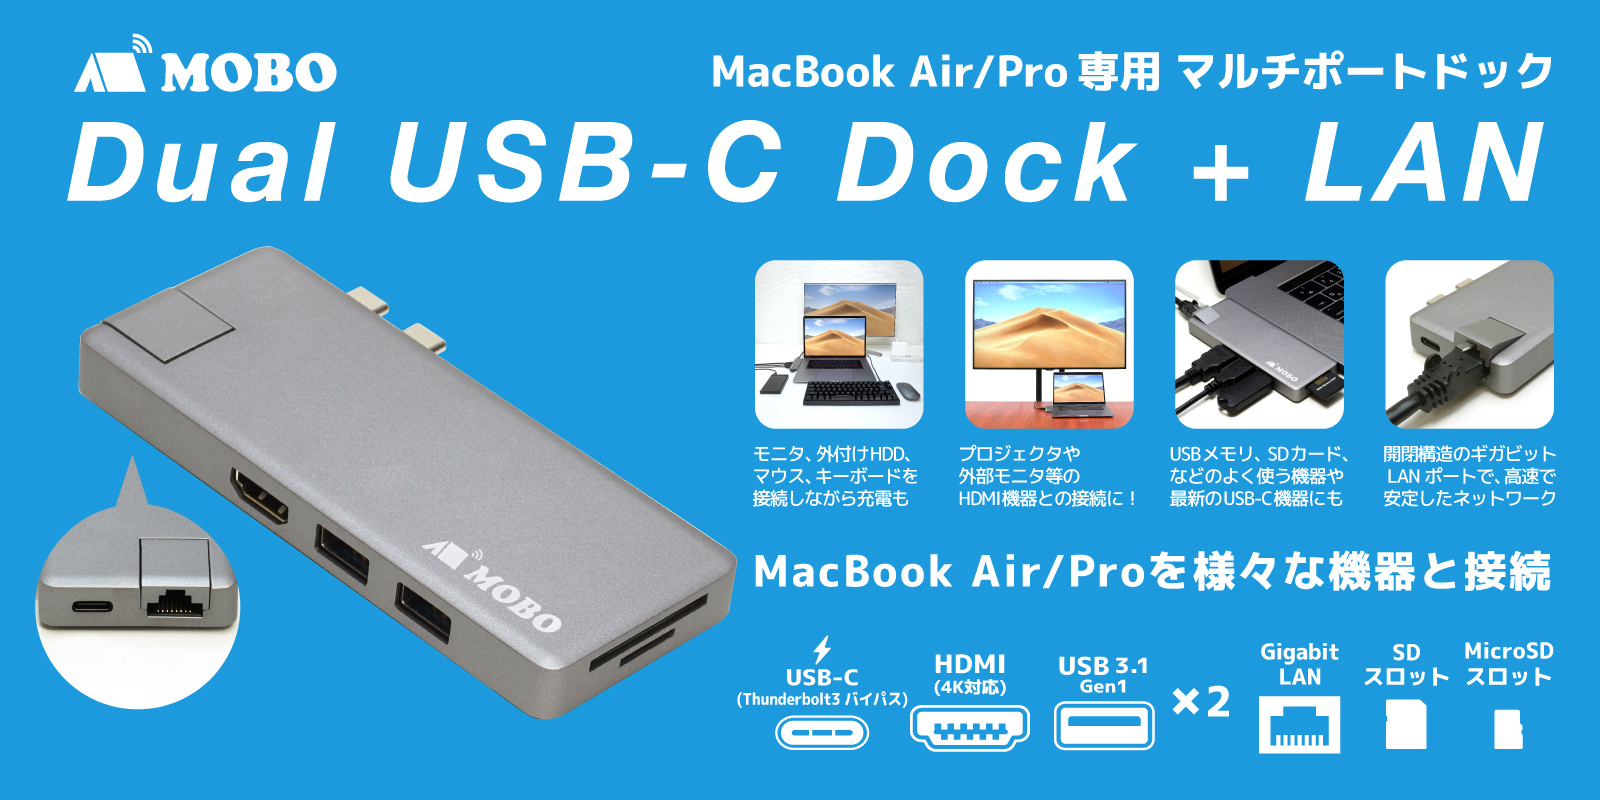 MacBook Air／Pro専用のUSB-Cマルチポートドック「Dual USB-C Dock ＋ LAN」が発売